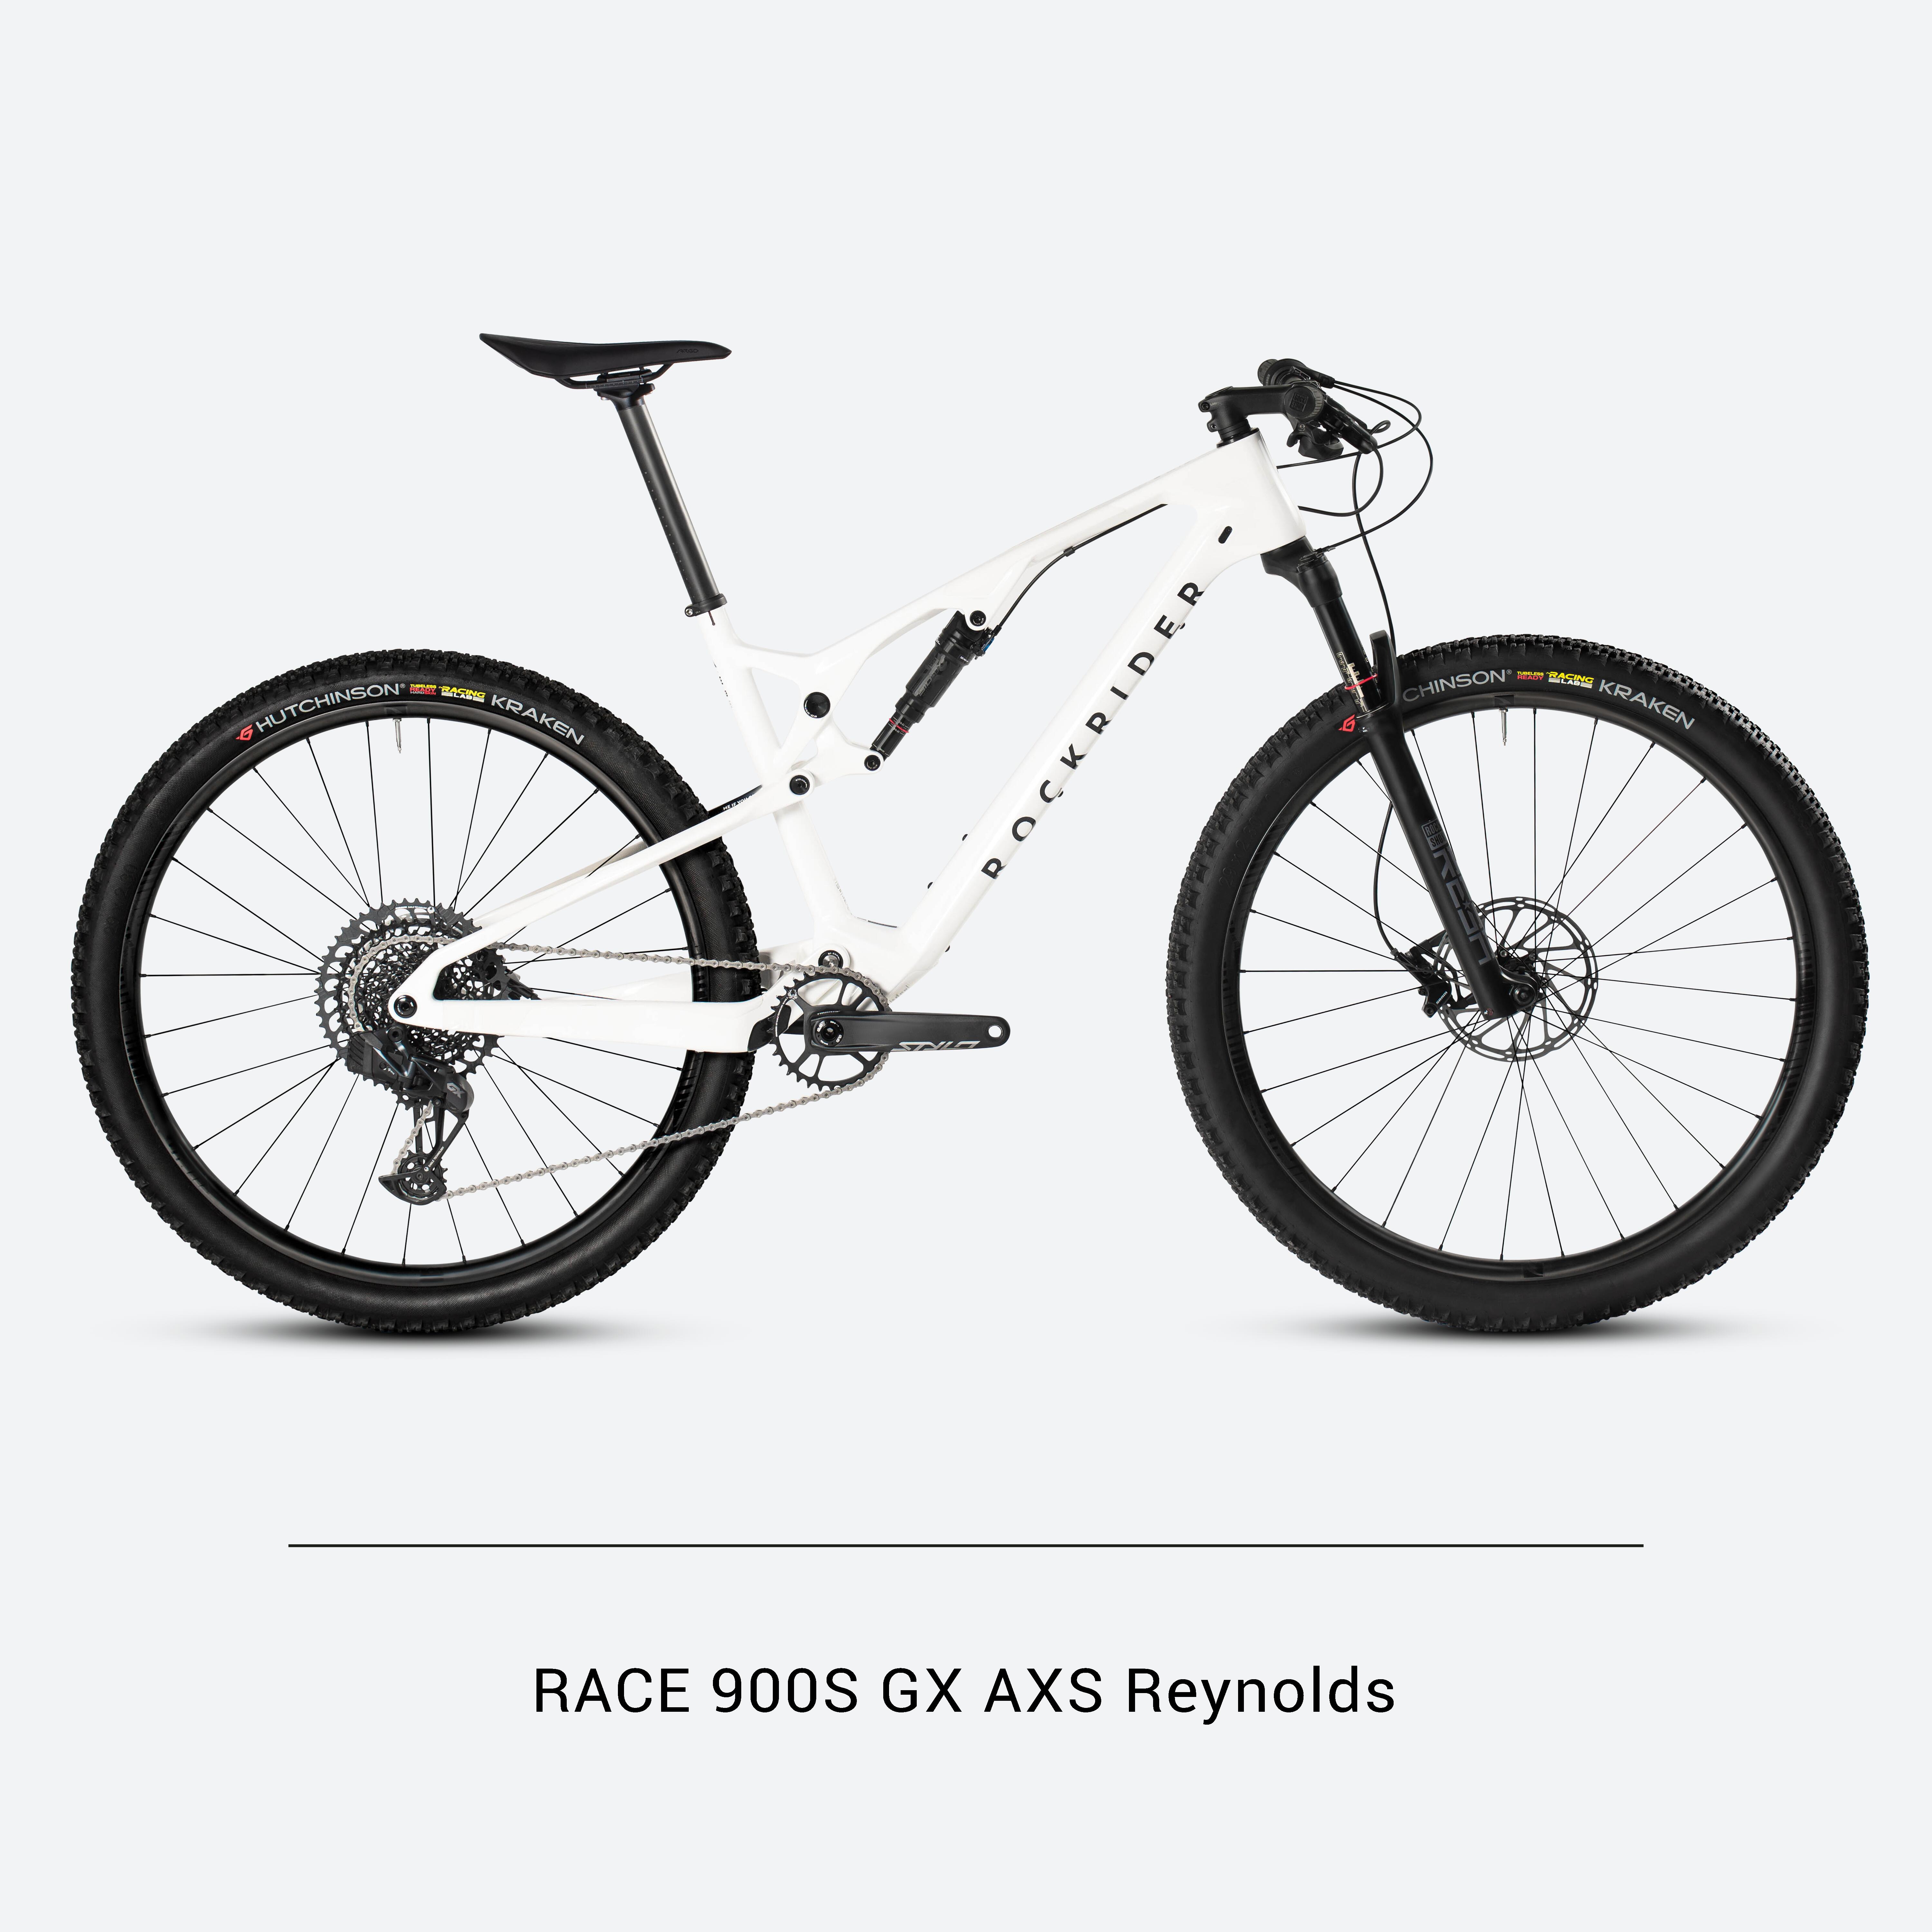 Bicicletă MTB cross country RACE 900S GX AXS, roți Reynolds, cadru carbon ROCKRIDER 900S